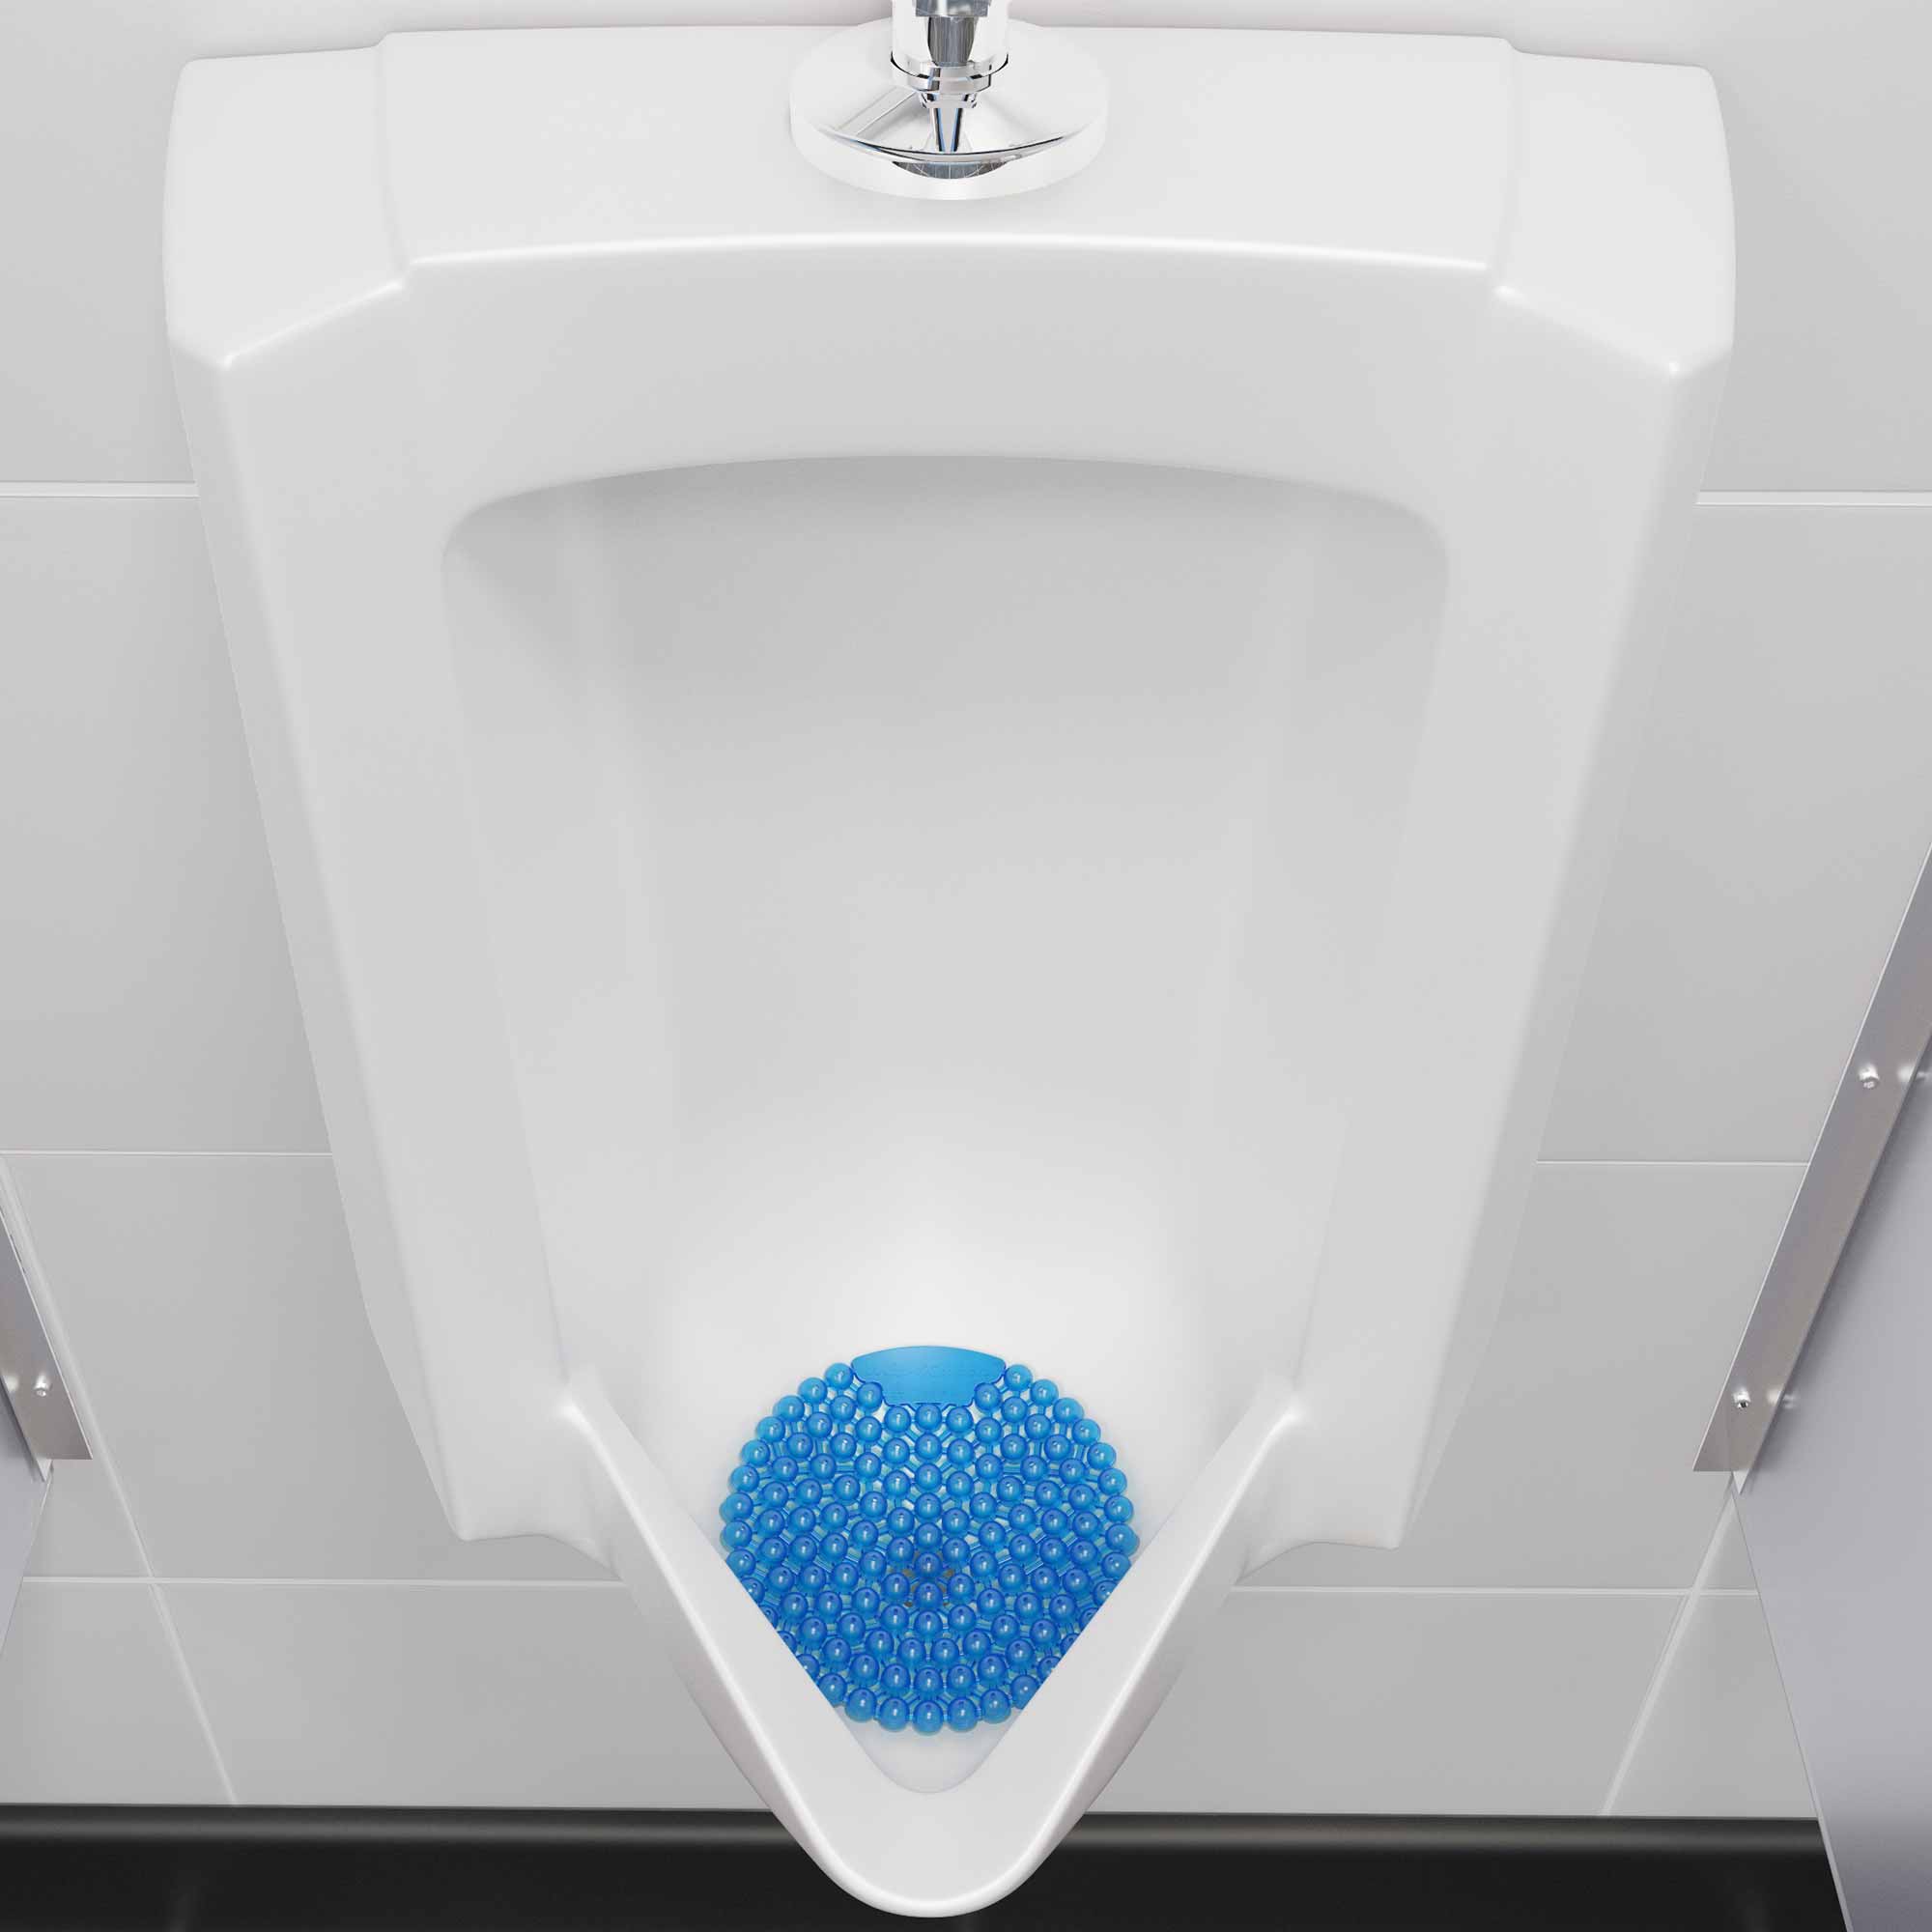 Wee-Screen - Urinal - Washrooms